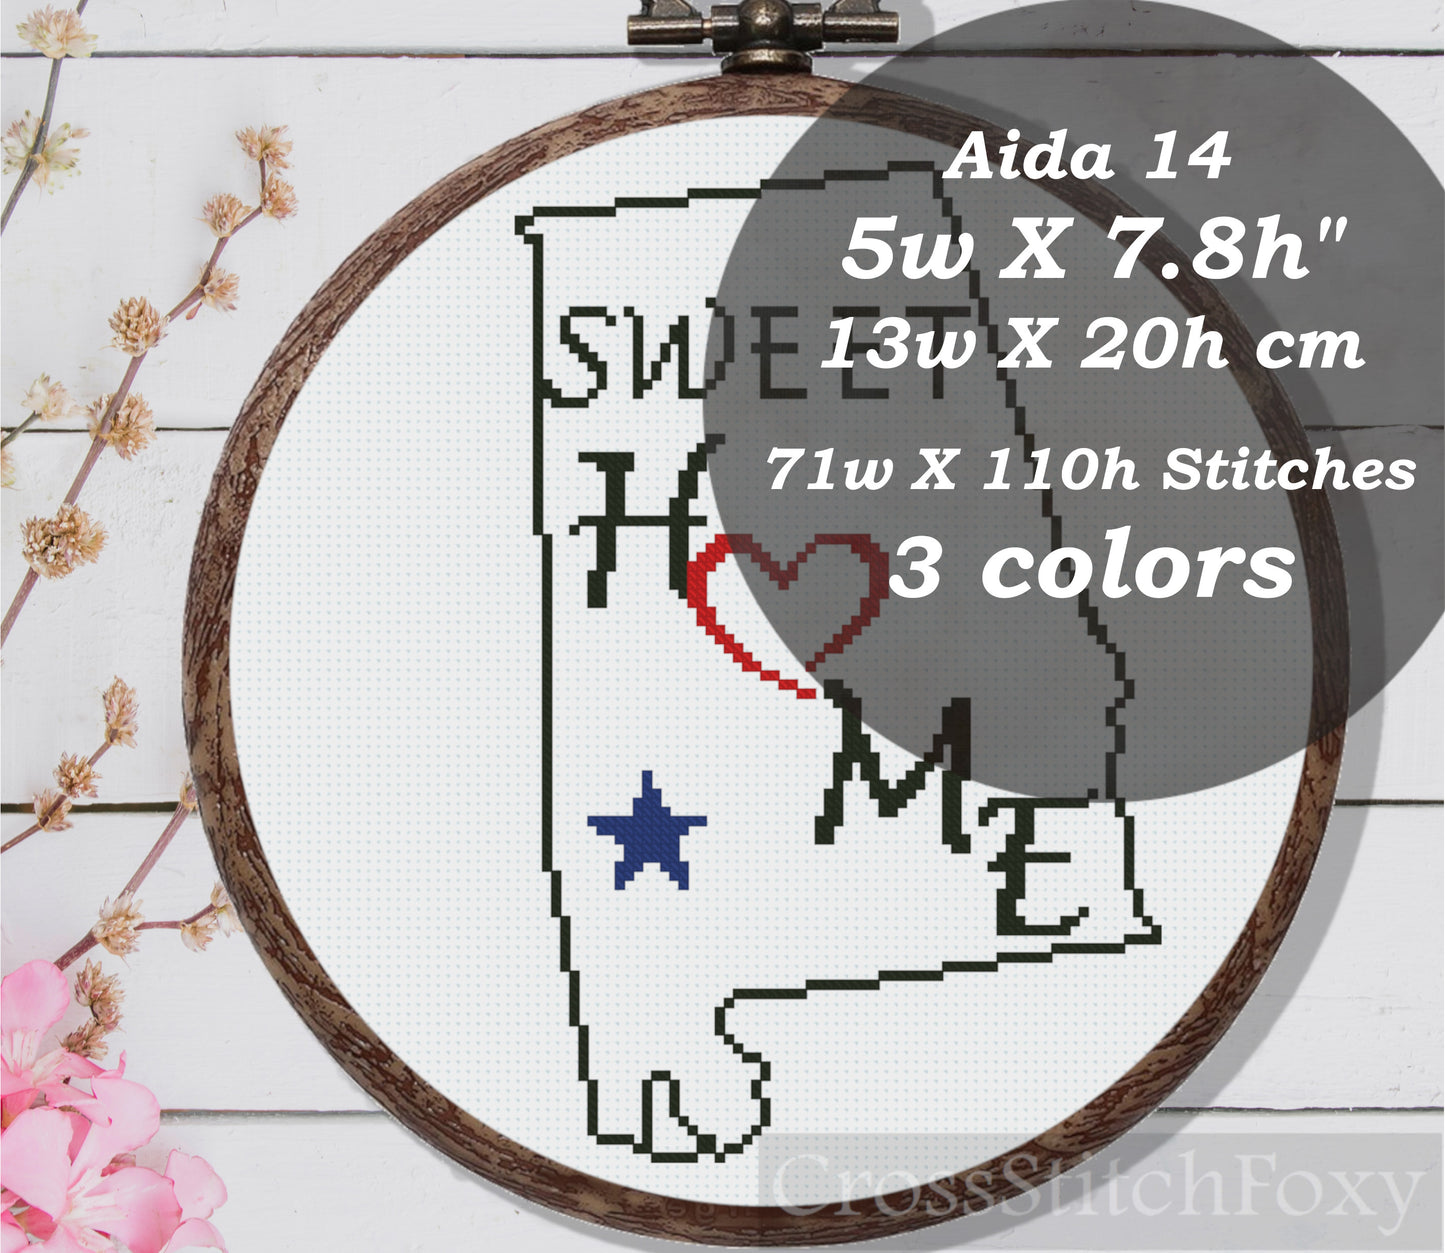 Alabama Sweet Home Sign US State Cross Stitch Pattern